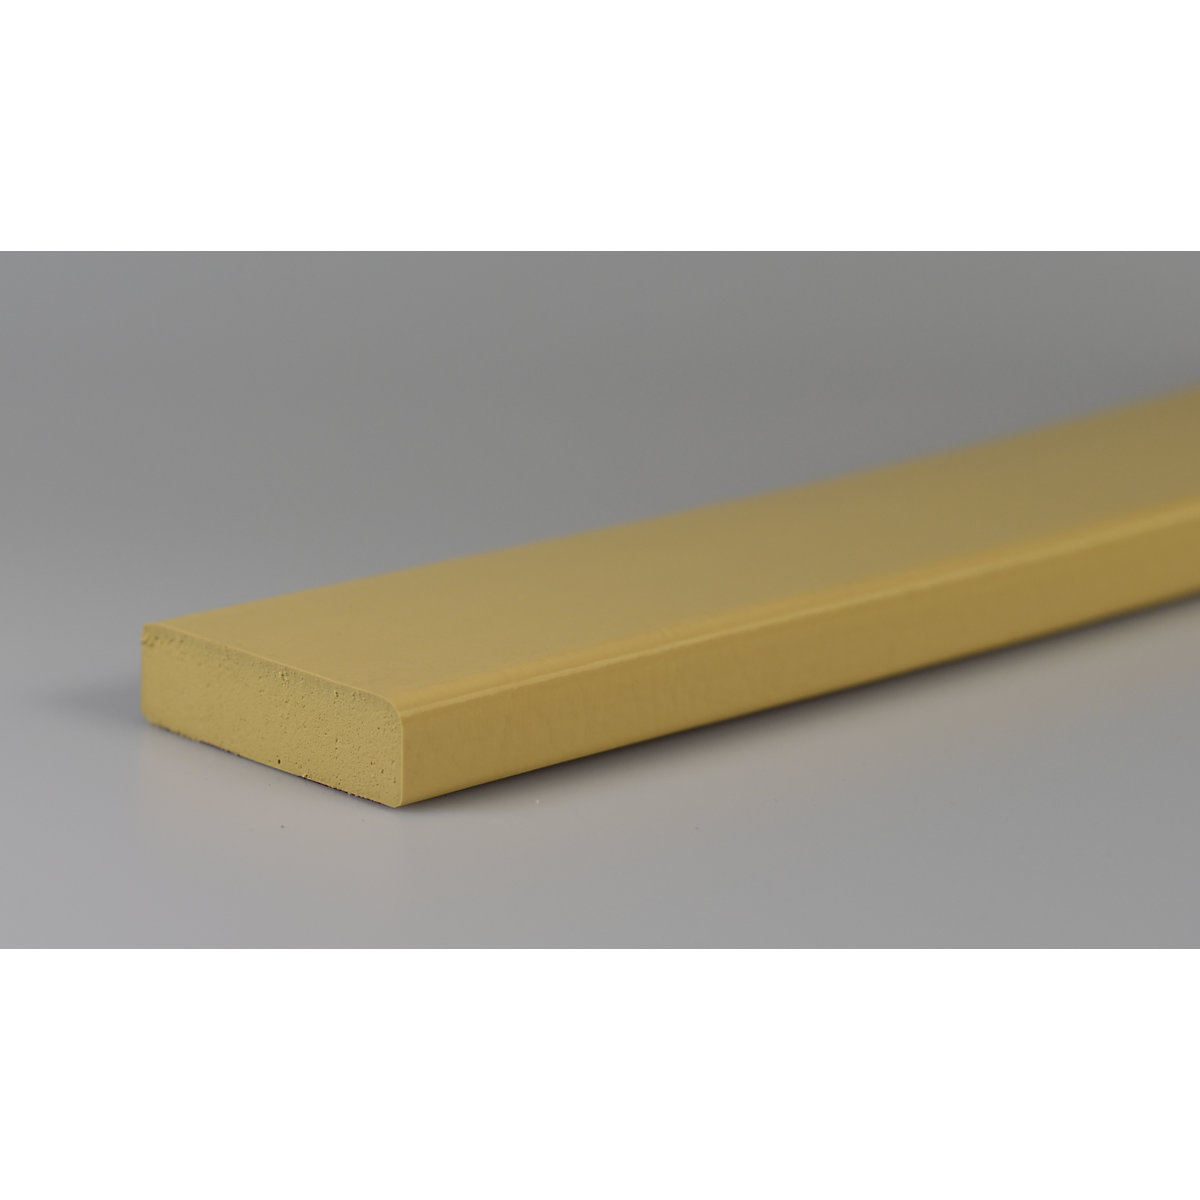 Knuffi®-oppervlaktebescherming – SHG, type S, stuk van 1 m, beige-21